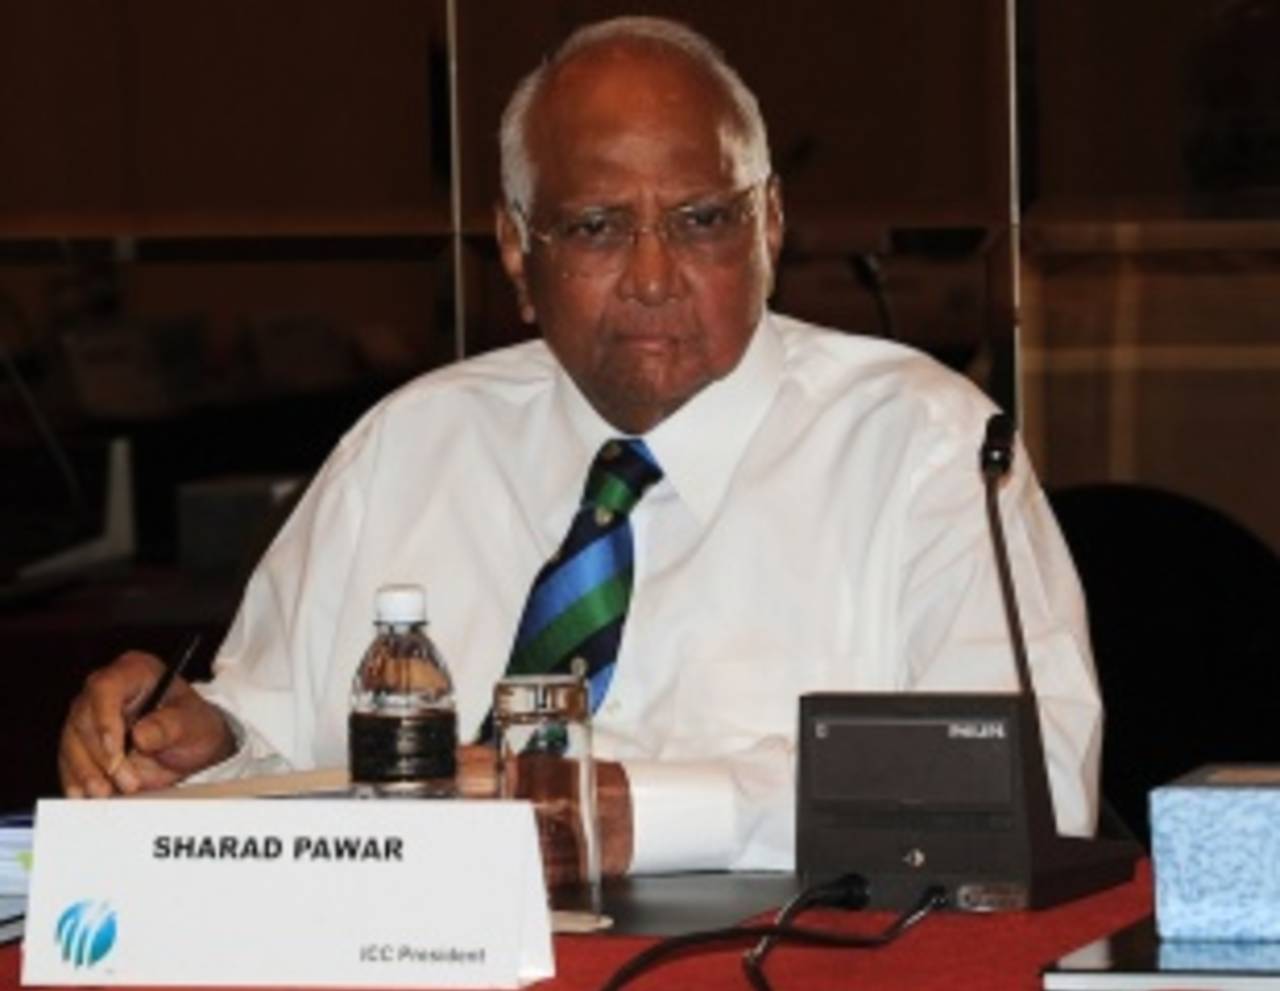 Sharad Pawar chaired the Executive Board meeting in Kuala Lumpur&nbsp;&nbsp;&bull;&nbsp;&nbsp;Getty Images